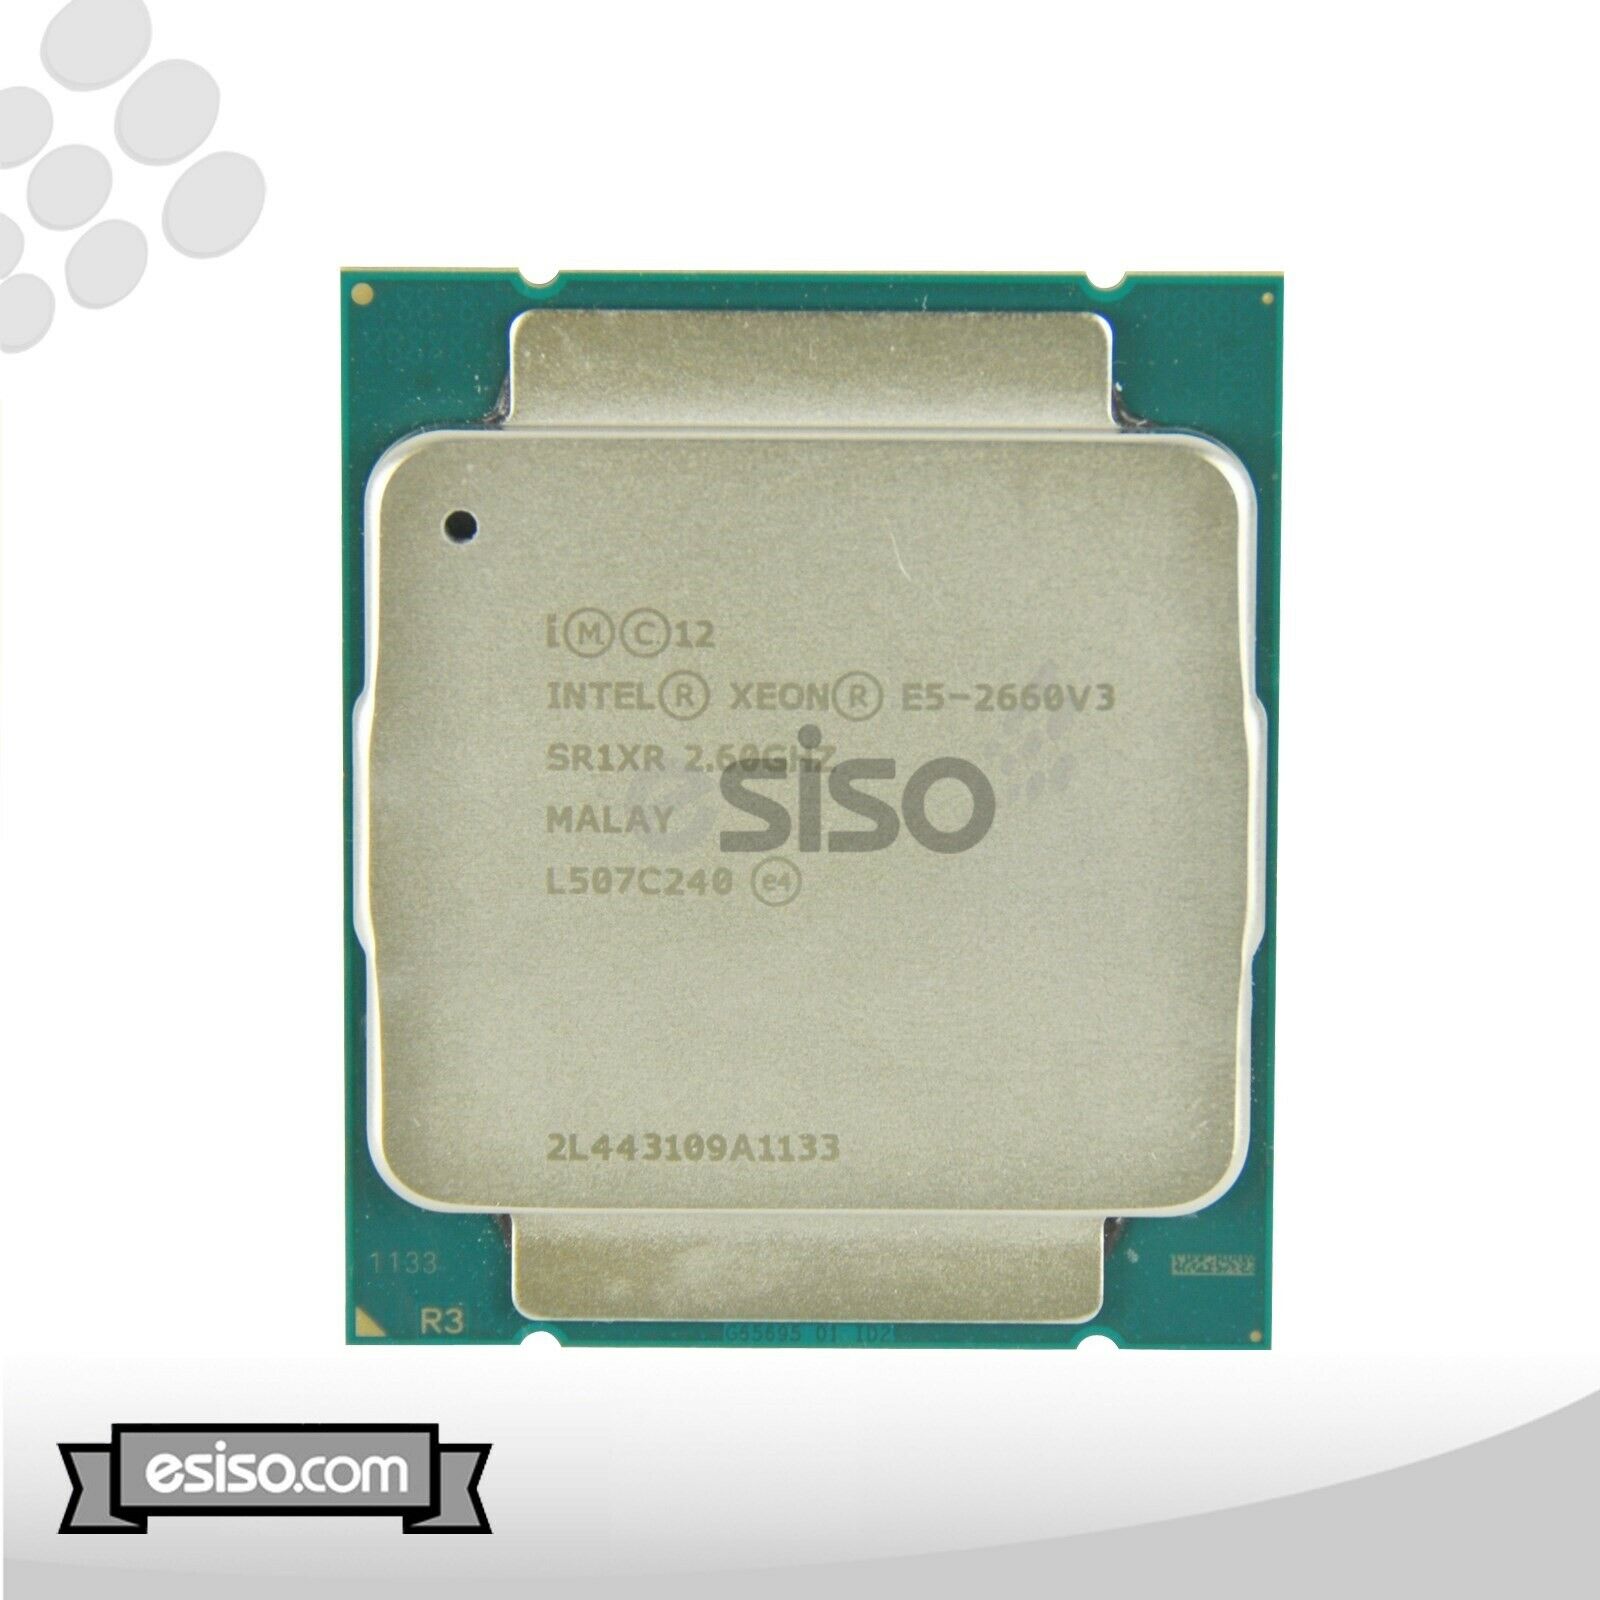 Sr1xr Intel Xeon E5-2660v3 2.60ghz 10 Cores 25mb 9.6 Gt/s 105w Processor